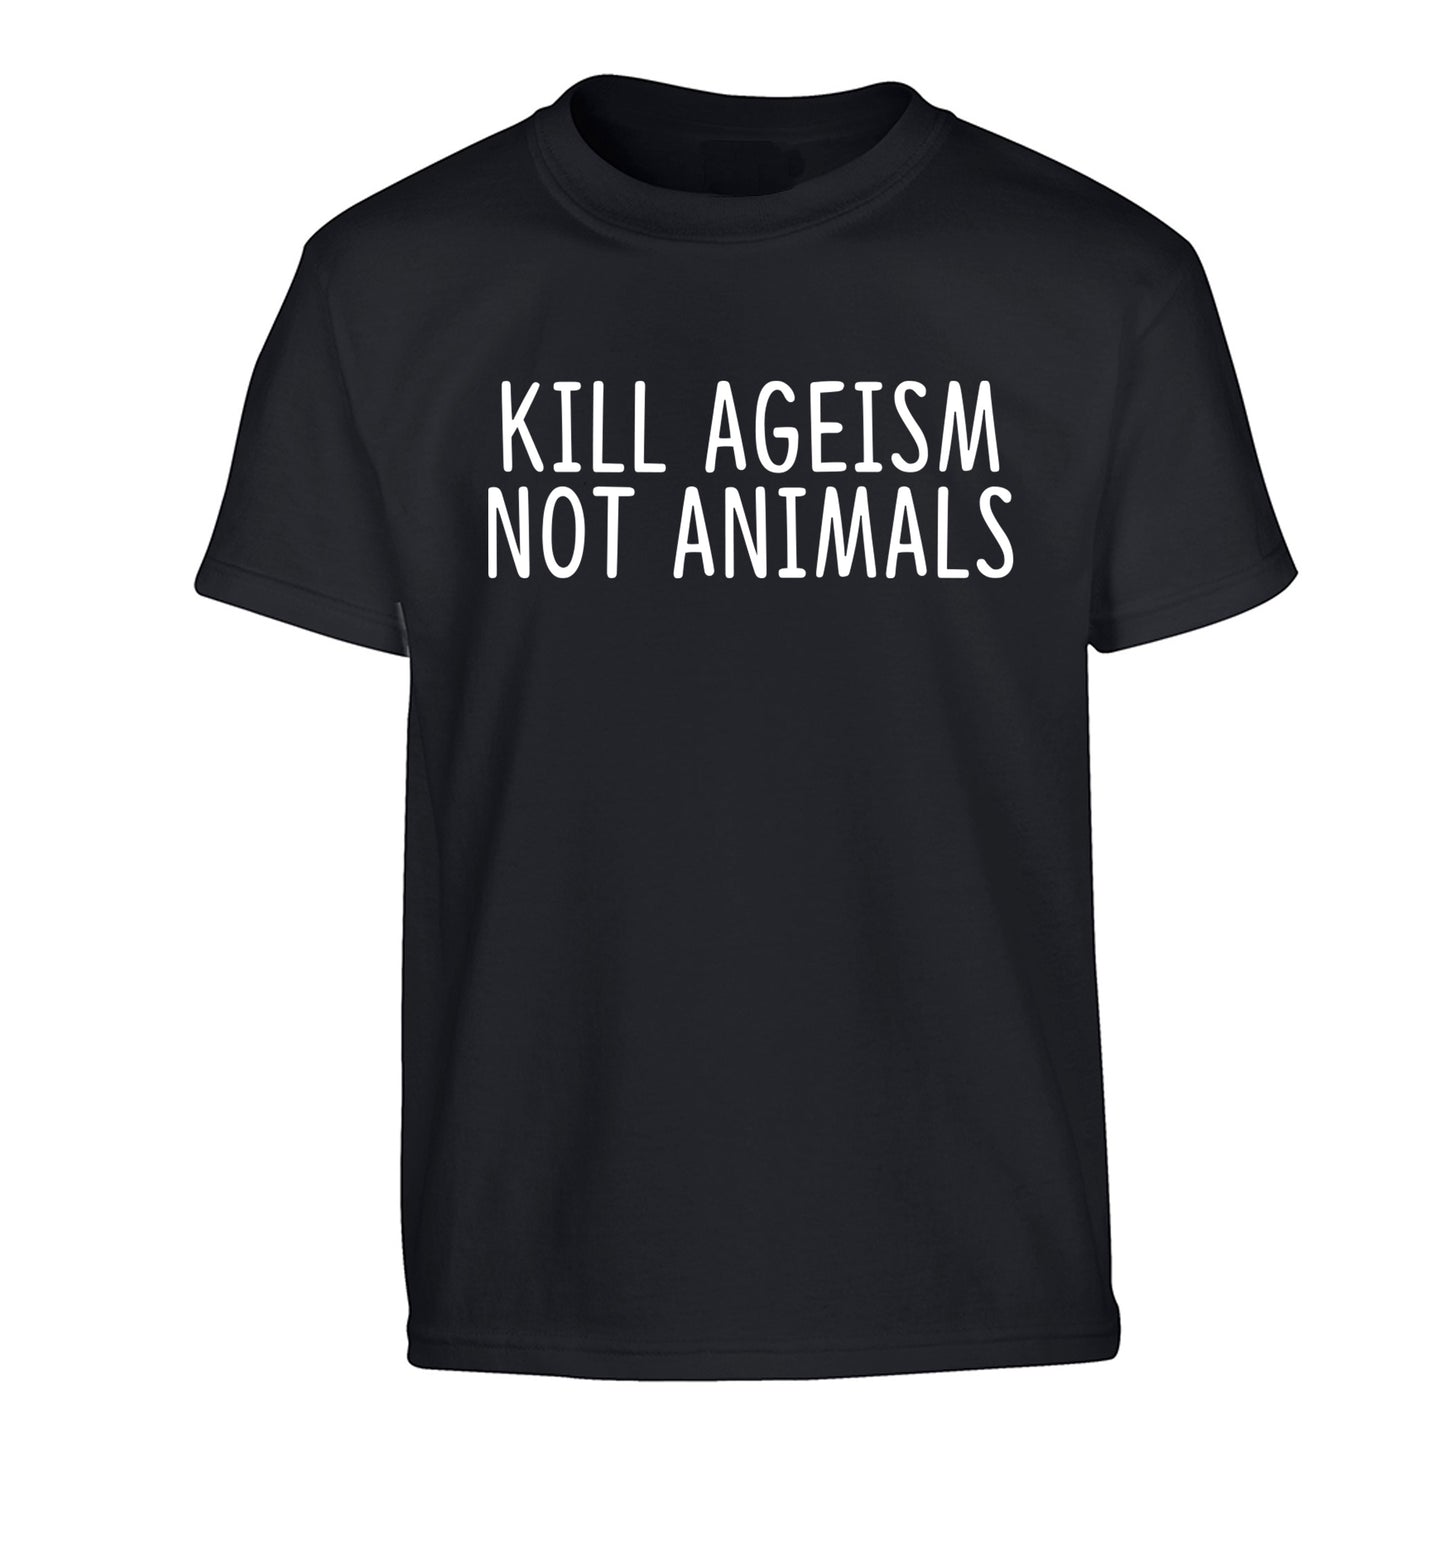 Kill Ageism Not Animals Children's black Tshirt 12-13 Years